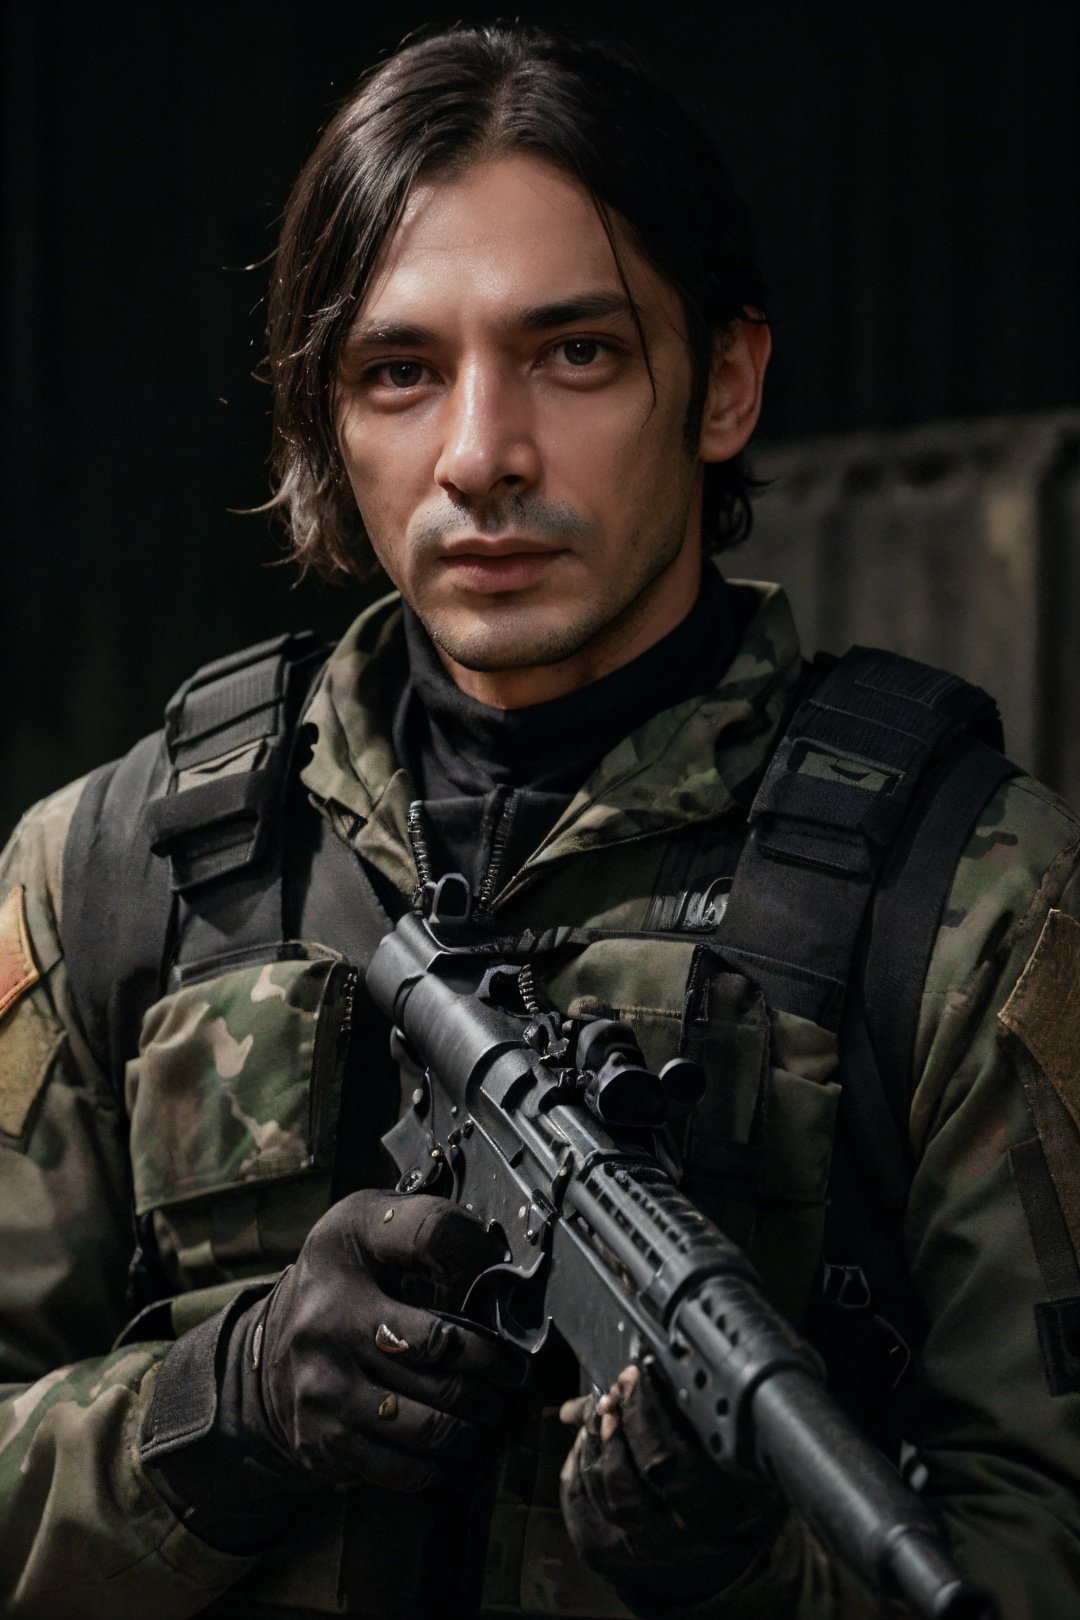 man army wearing black ops uniform, holding carbine rifle, anthropomorphic, super detail, ultra hd, 8k, real life, maximum facial detail, cinematic lighting, <lora:arya-03:1>